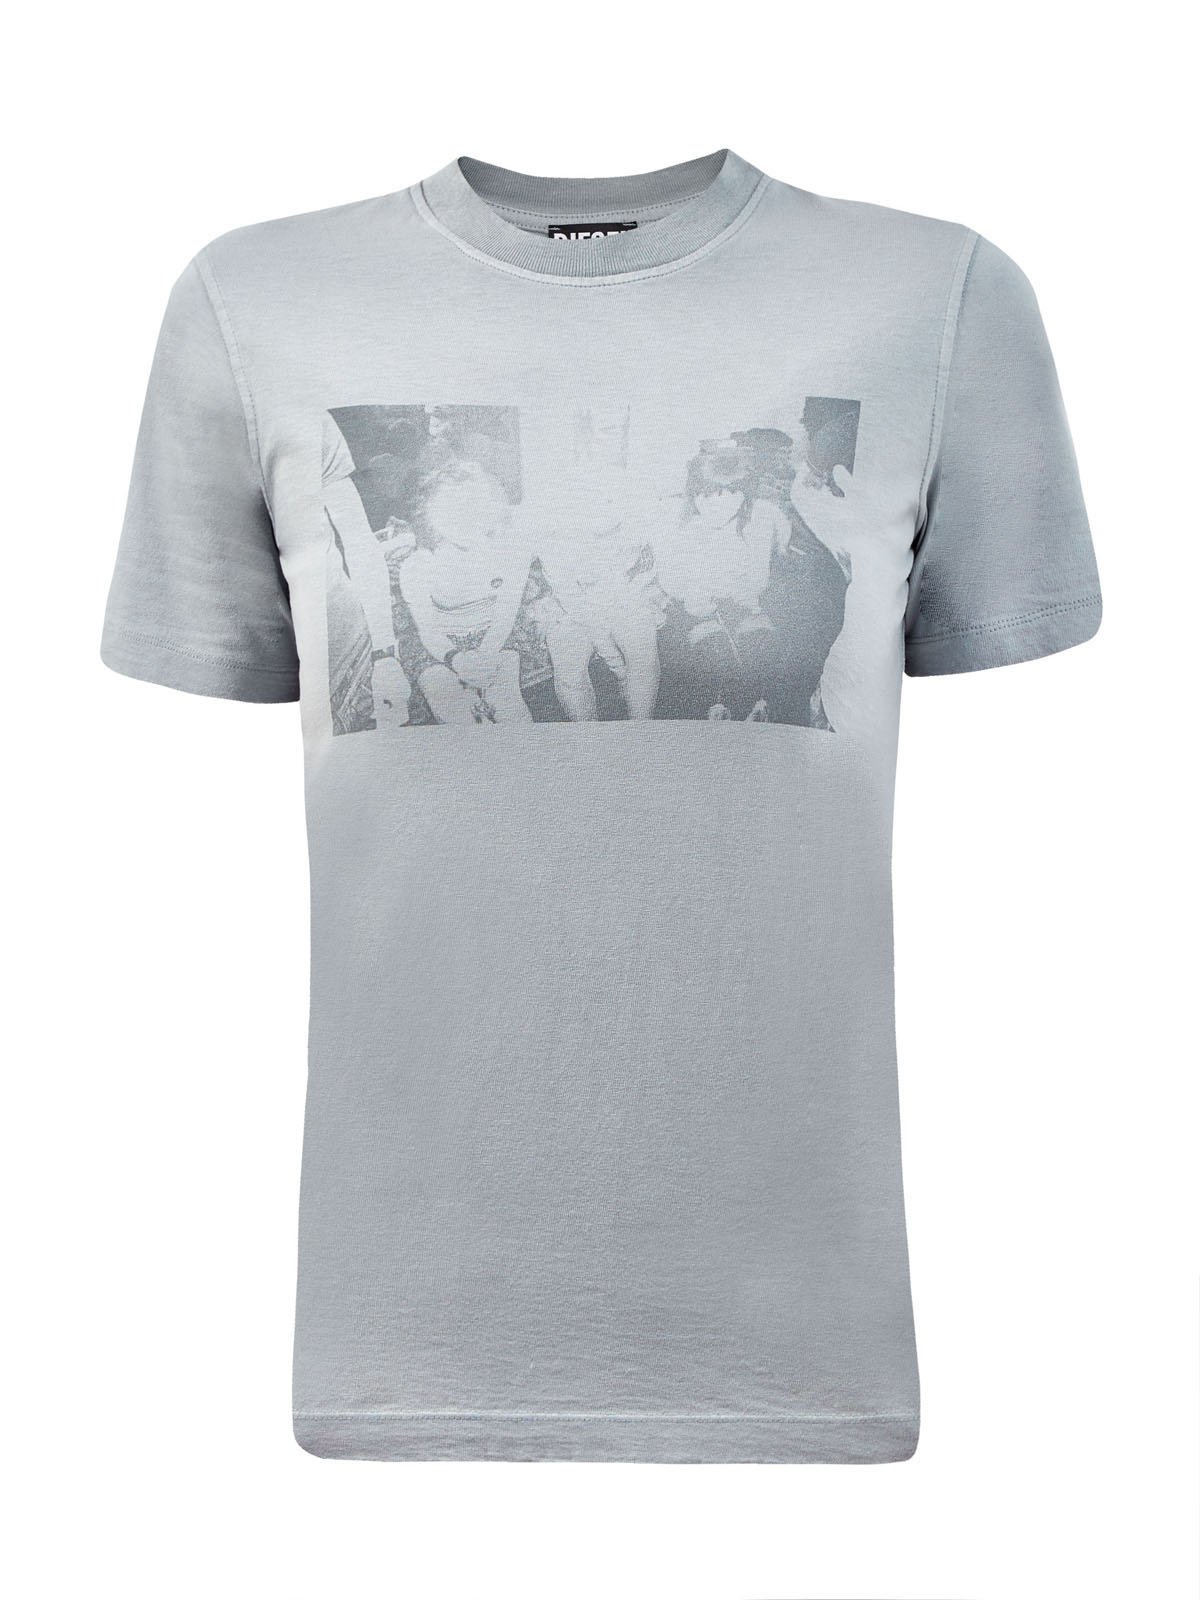 Хлопковая футболка T-Reg из джерси с цифровым принтом DIESEL, цвет серый, размер S;M;L;XL - фото 1